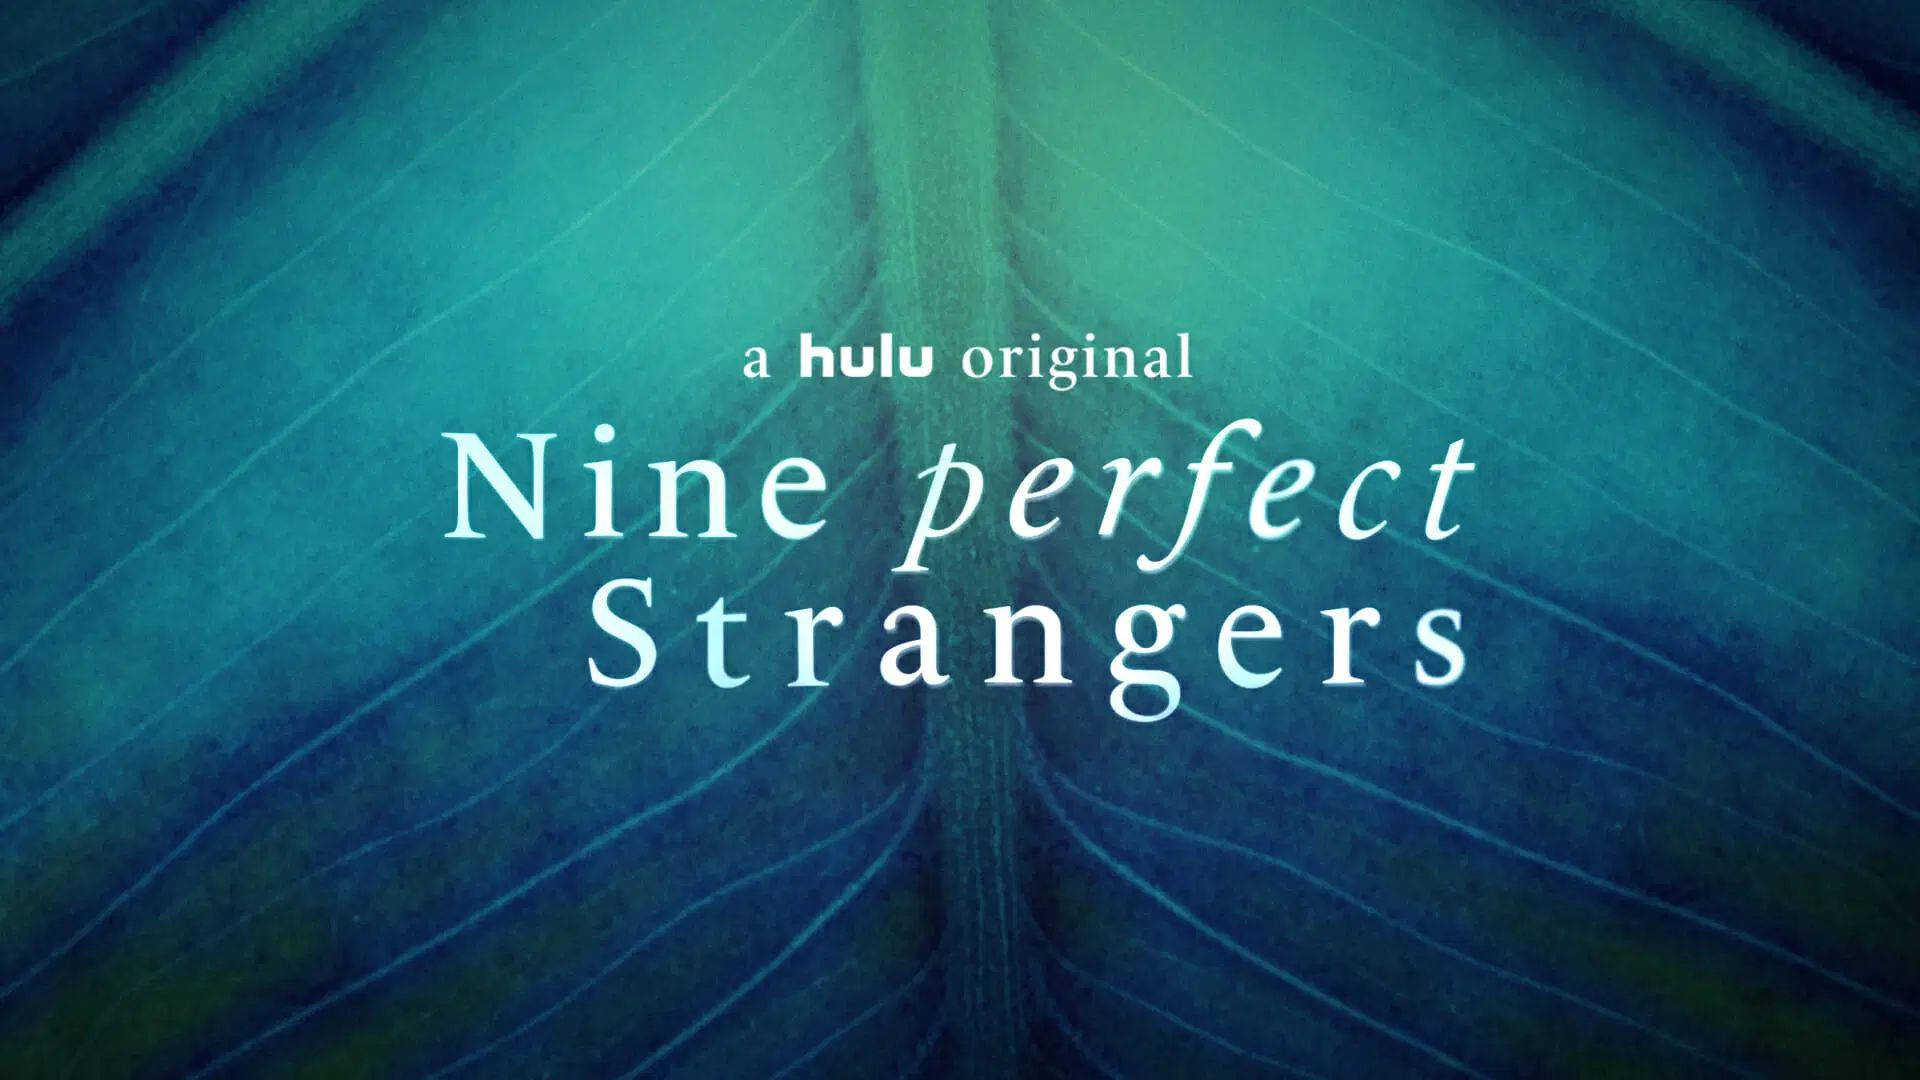 Nine Perfect Strangers On Leaf Background Background